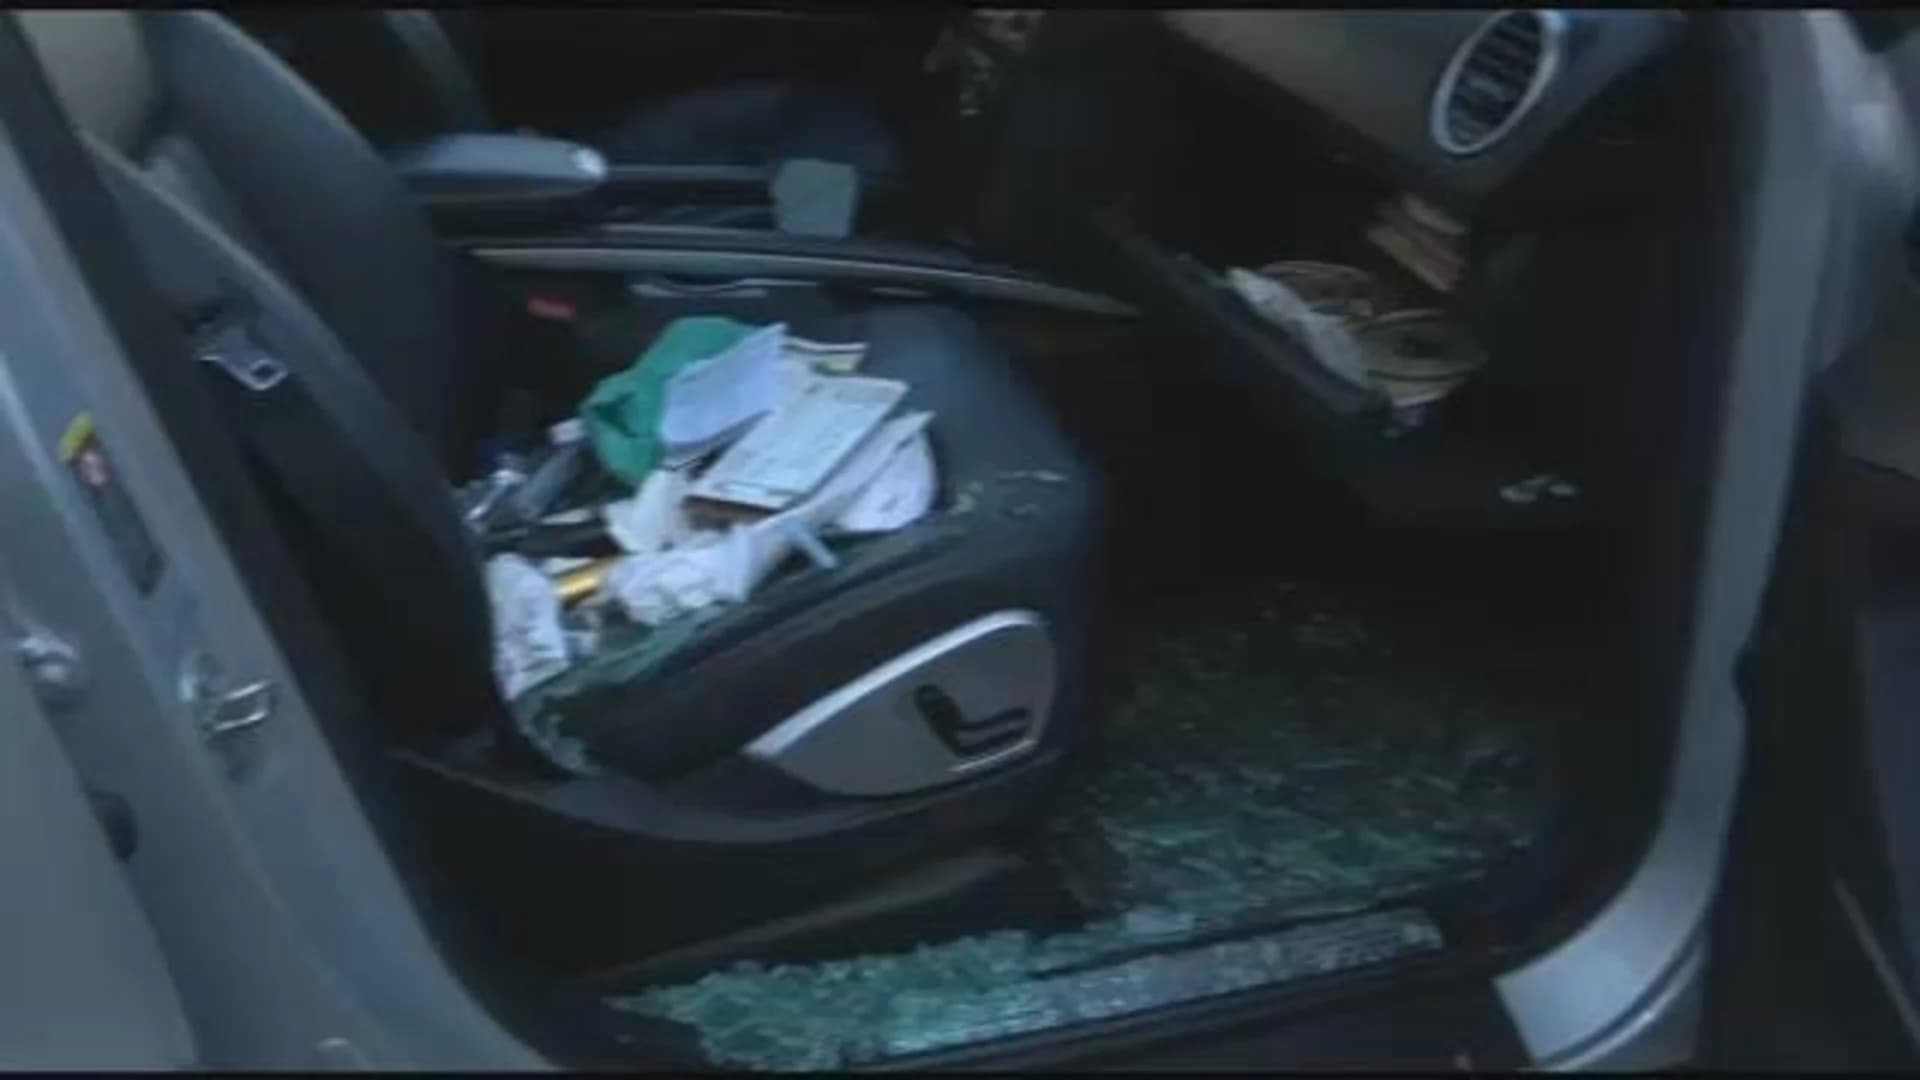 Police: Dozens of cars broken into overnight in Bensonhurst